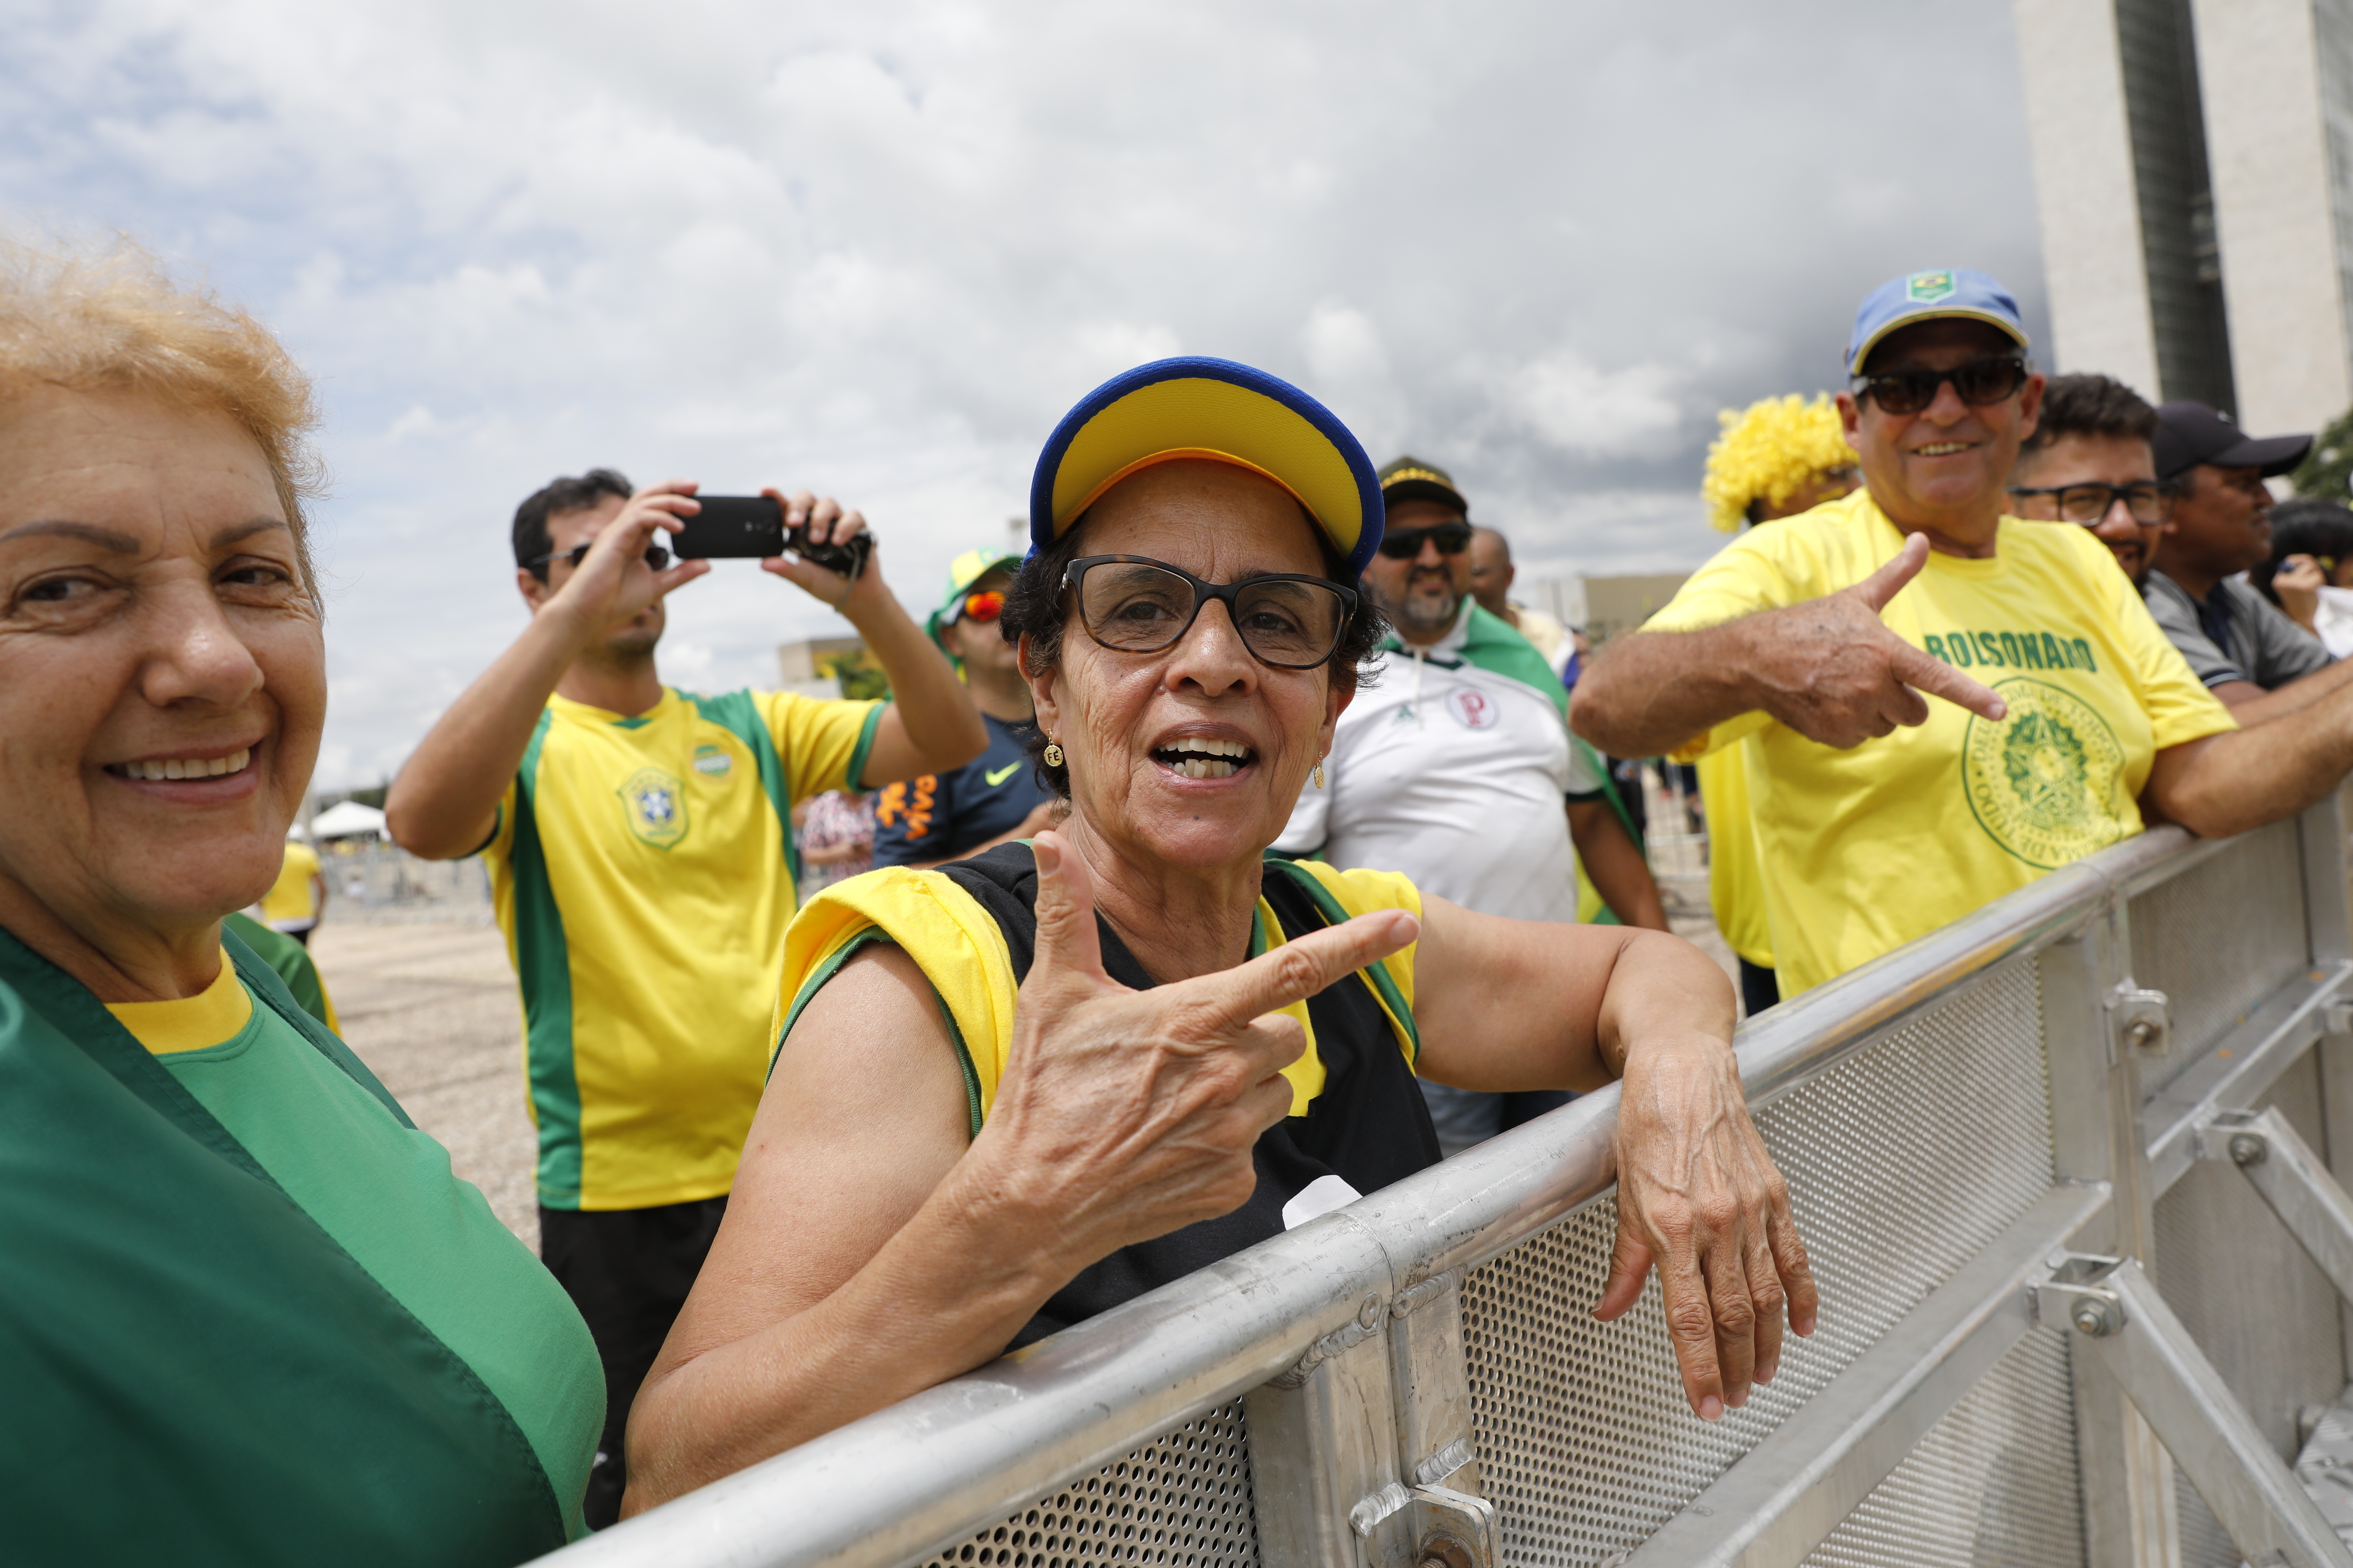 Locals show their support for Brazil's President Elect Jair Bolsonaro prior to his inauguration, in Brasilia, Brazil, Tuesday Jan. 1, 2019. (AP Photo/Silvia Izquierdo)